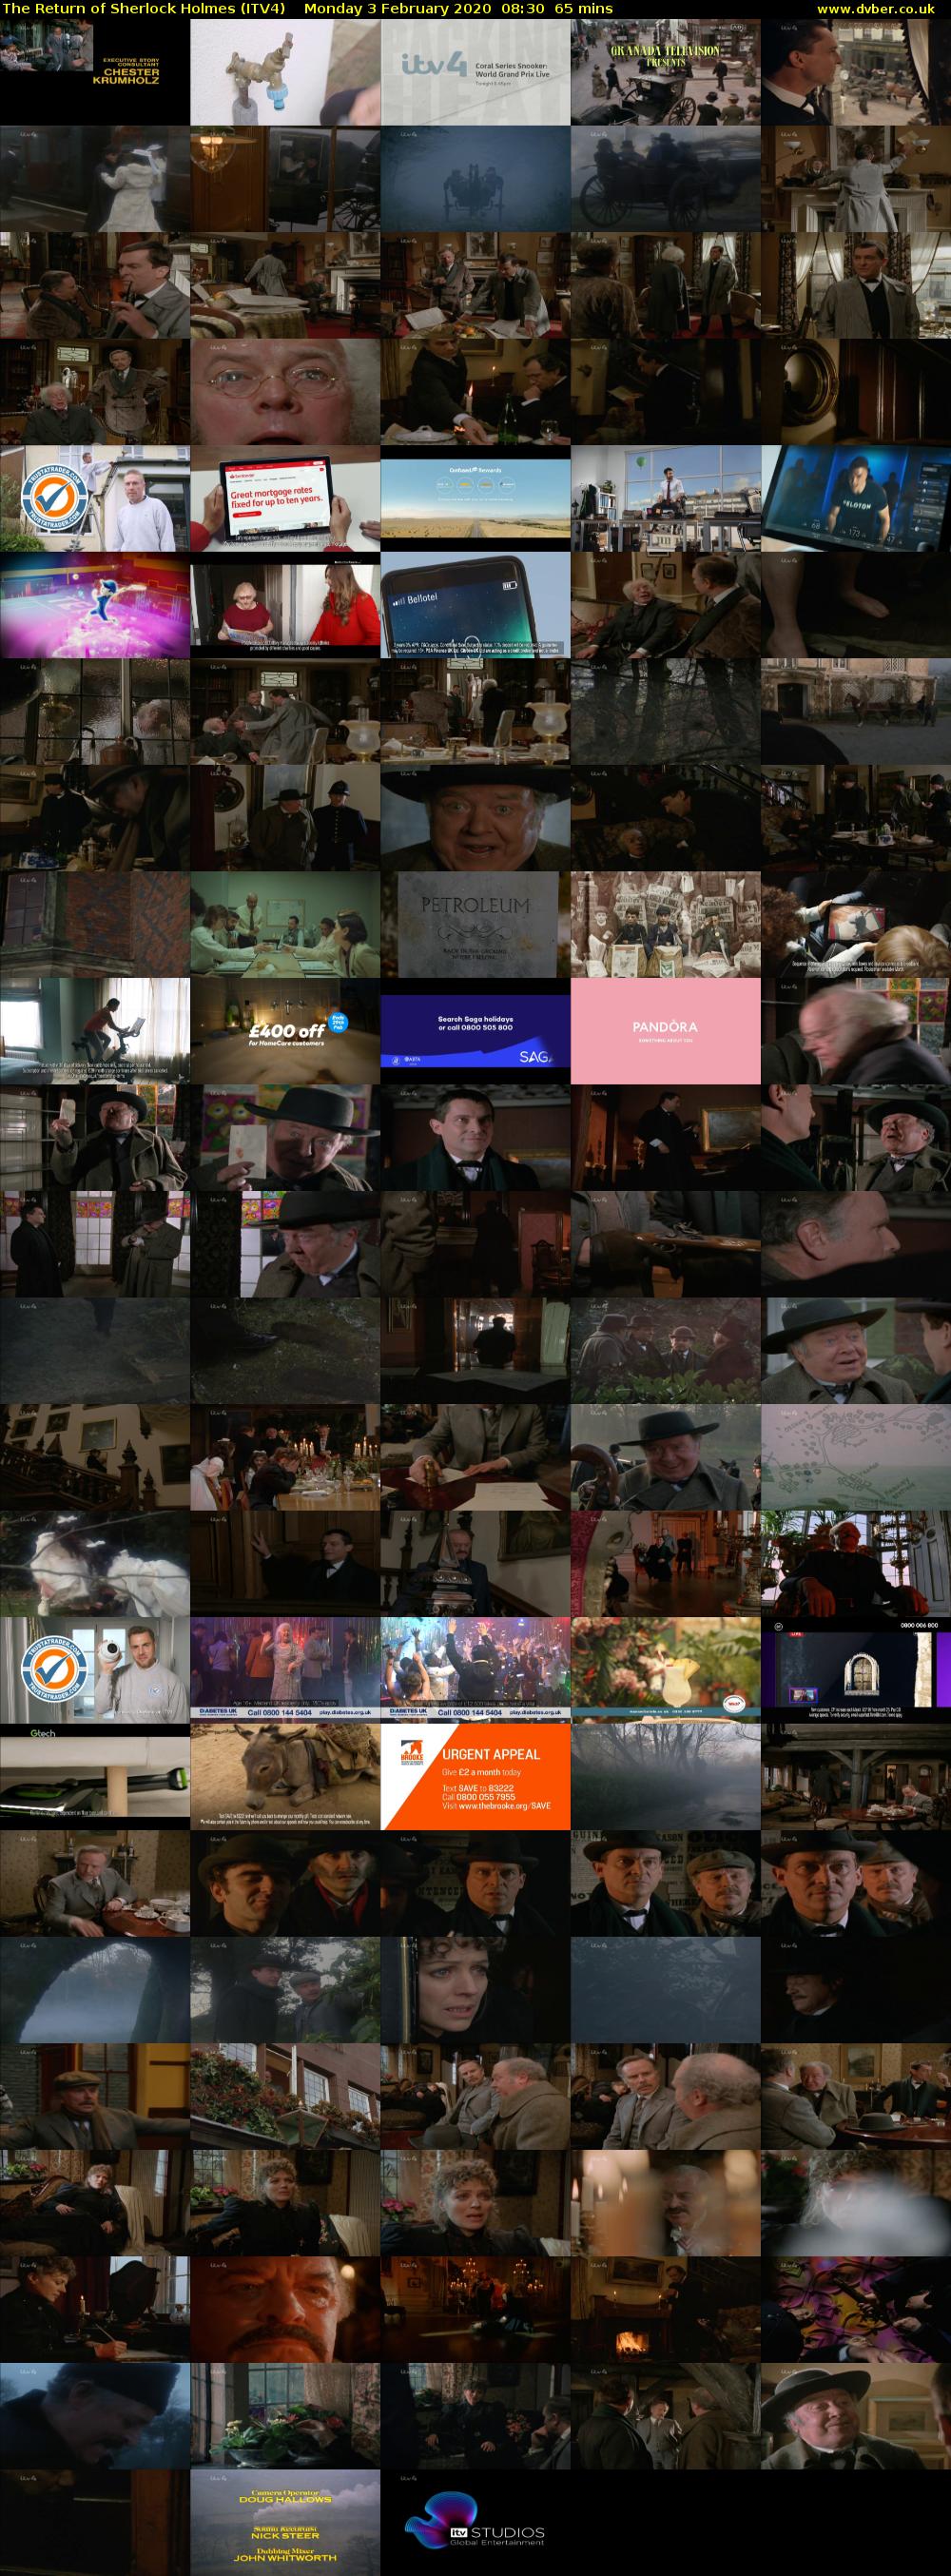 The Return of Sherlock Holmes (ITV4) Monday 3 February 2020 08:30 - 09:35